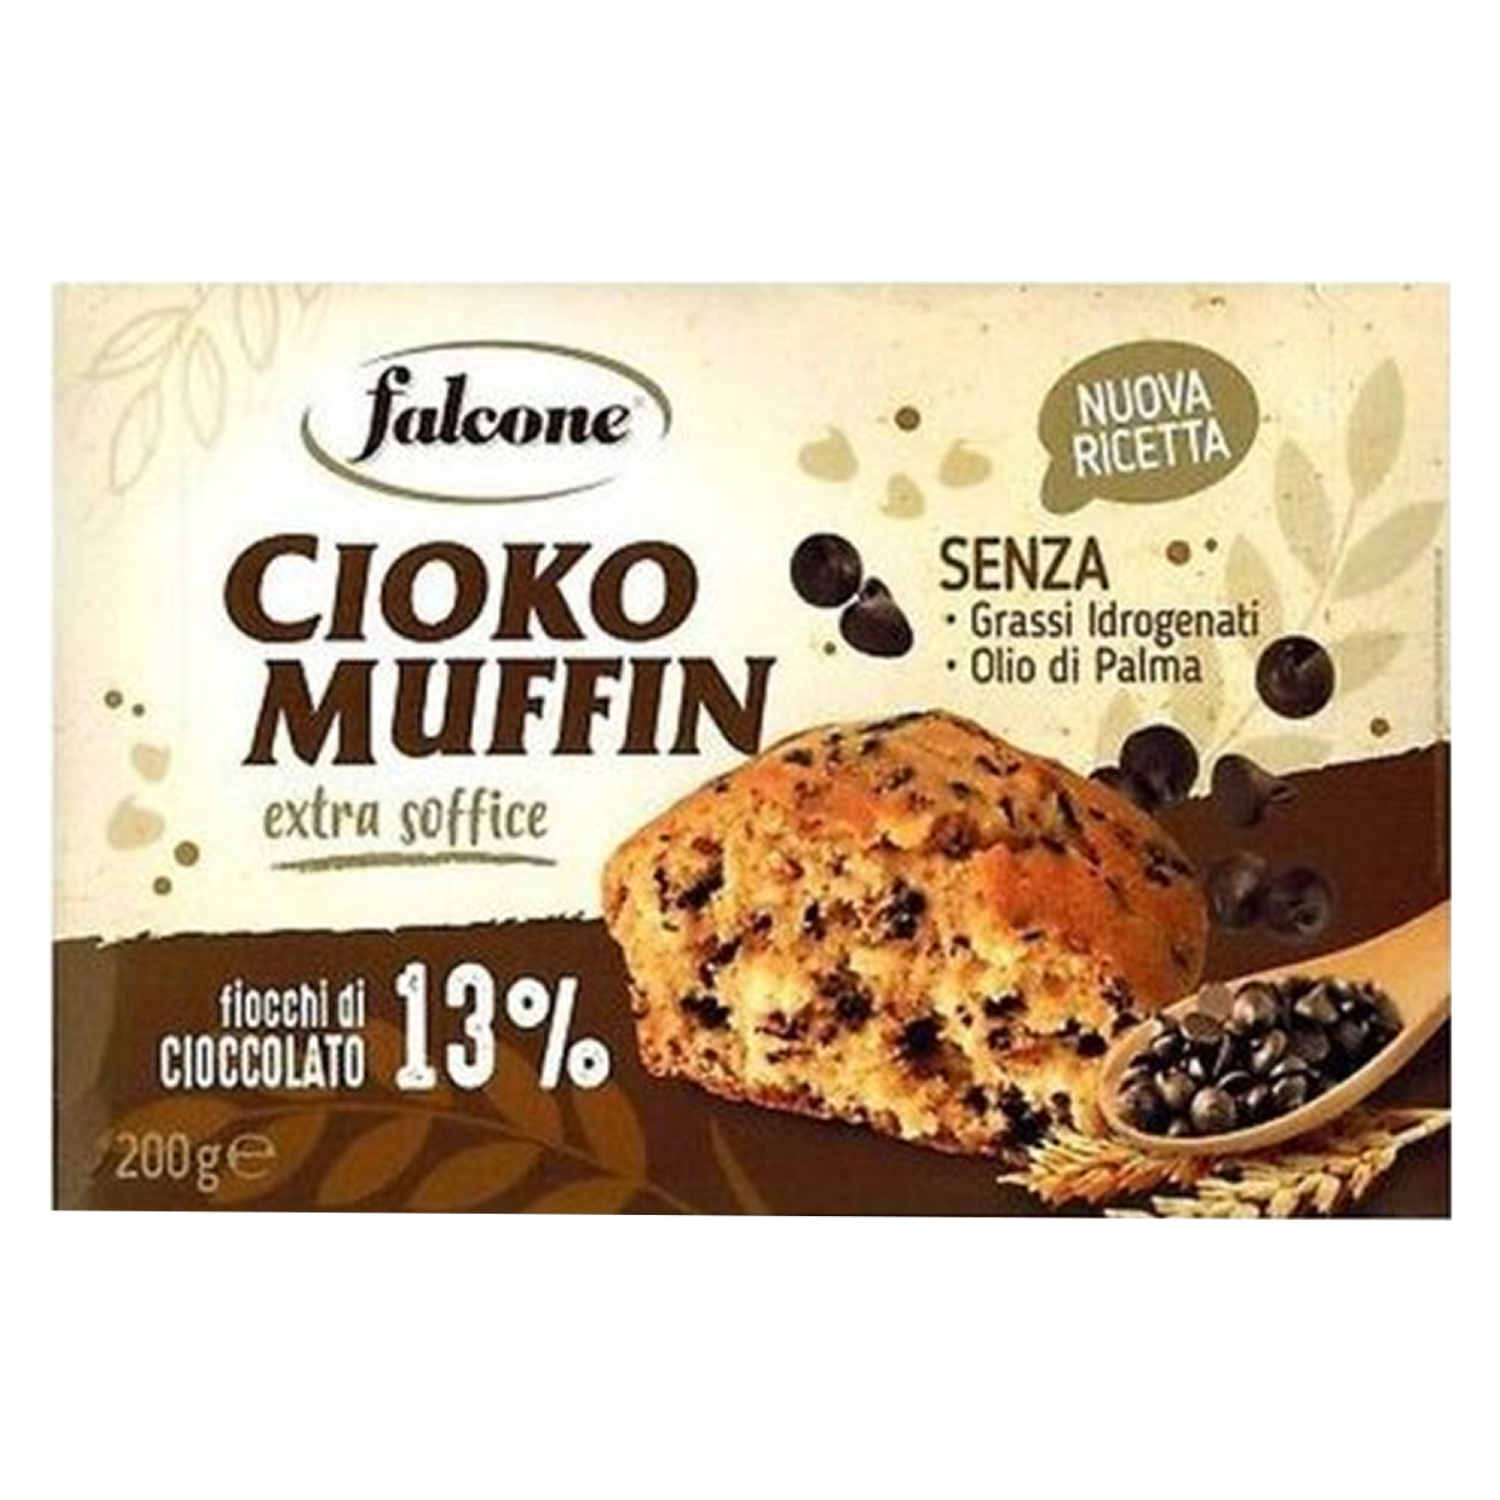 Muffin Cioko extra soffice 200g Falcone